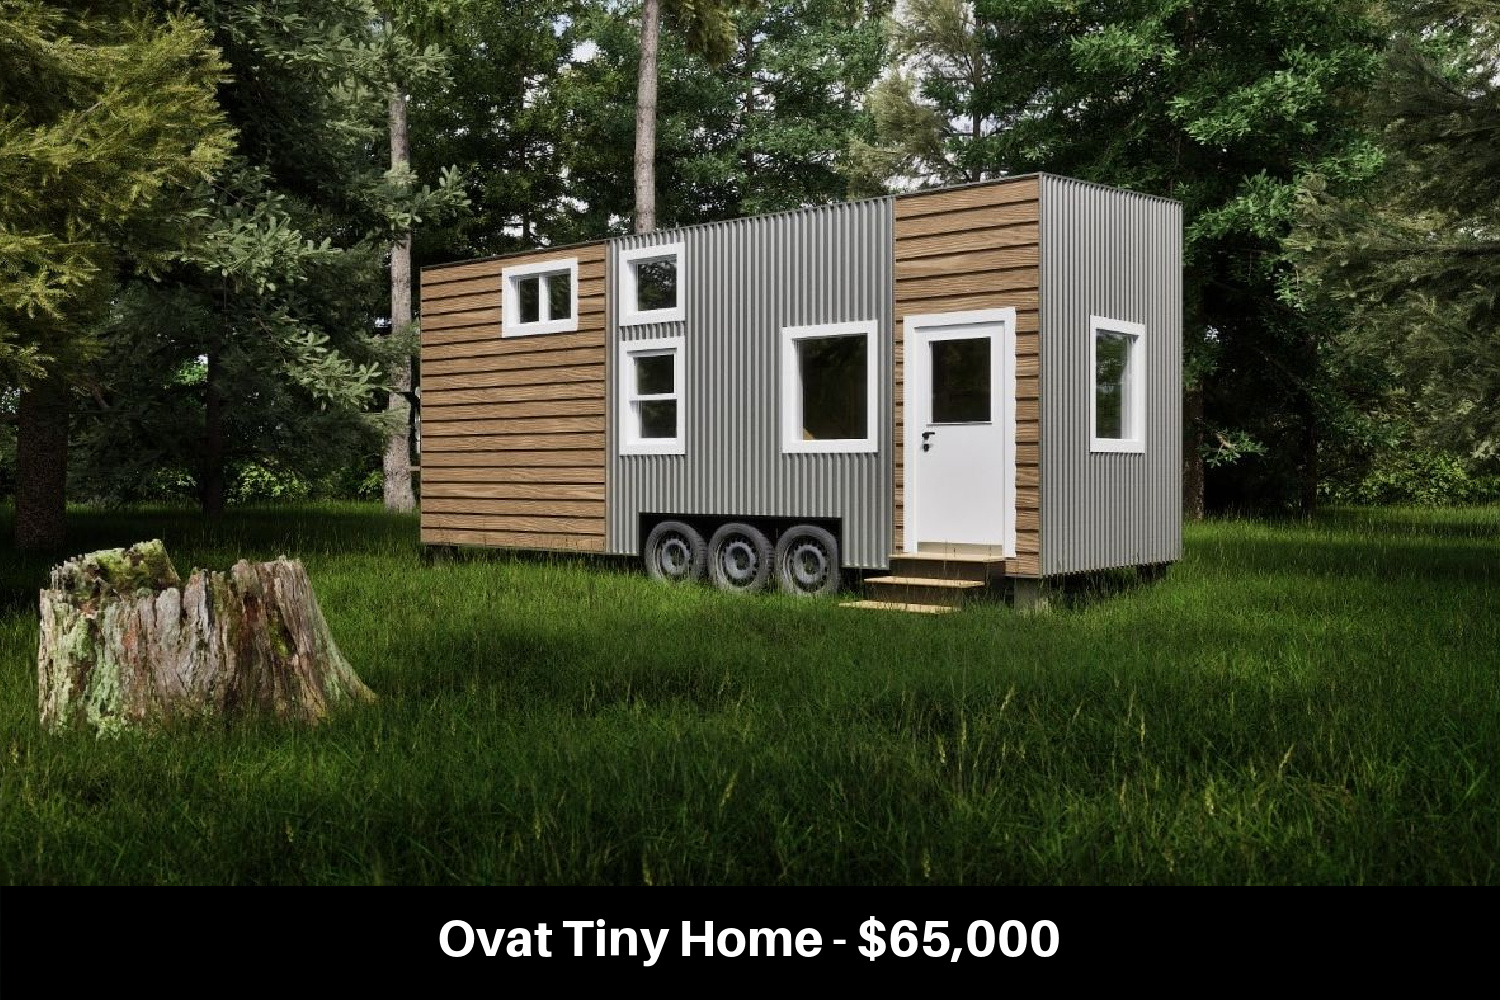 Ovat Tiny Home - $65,000